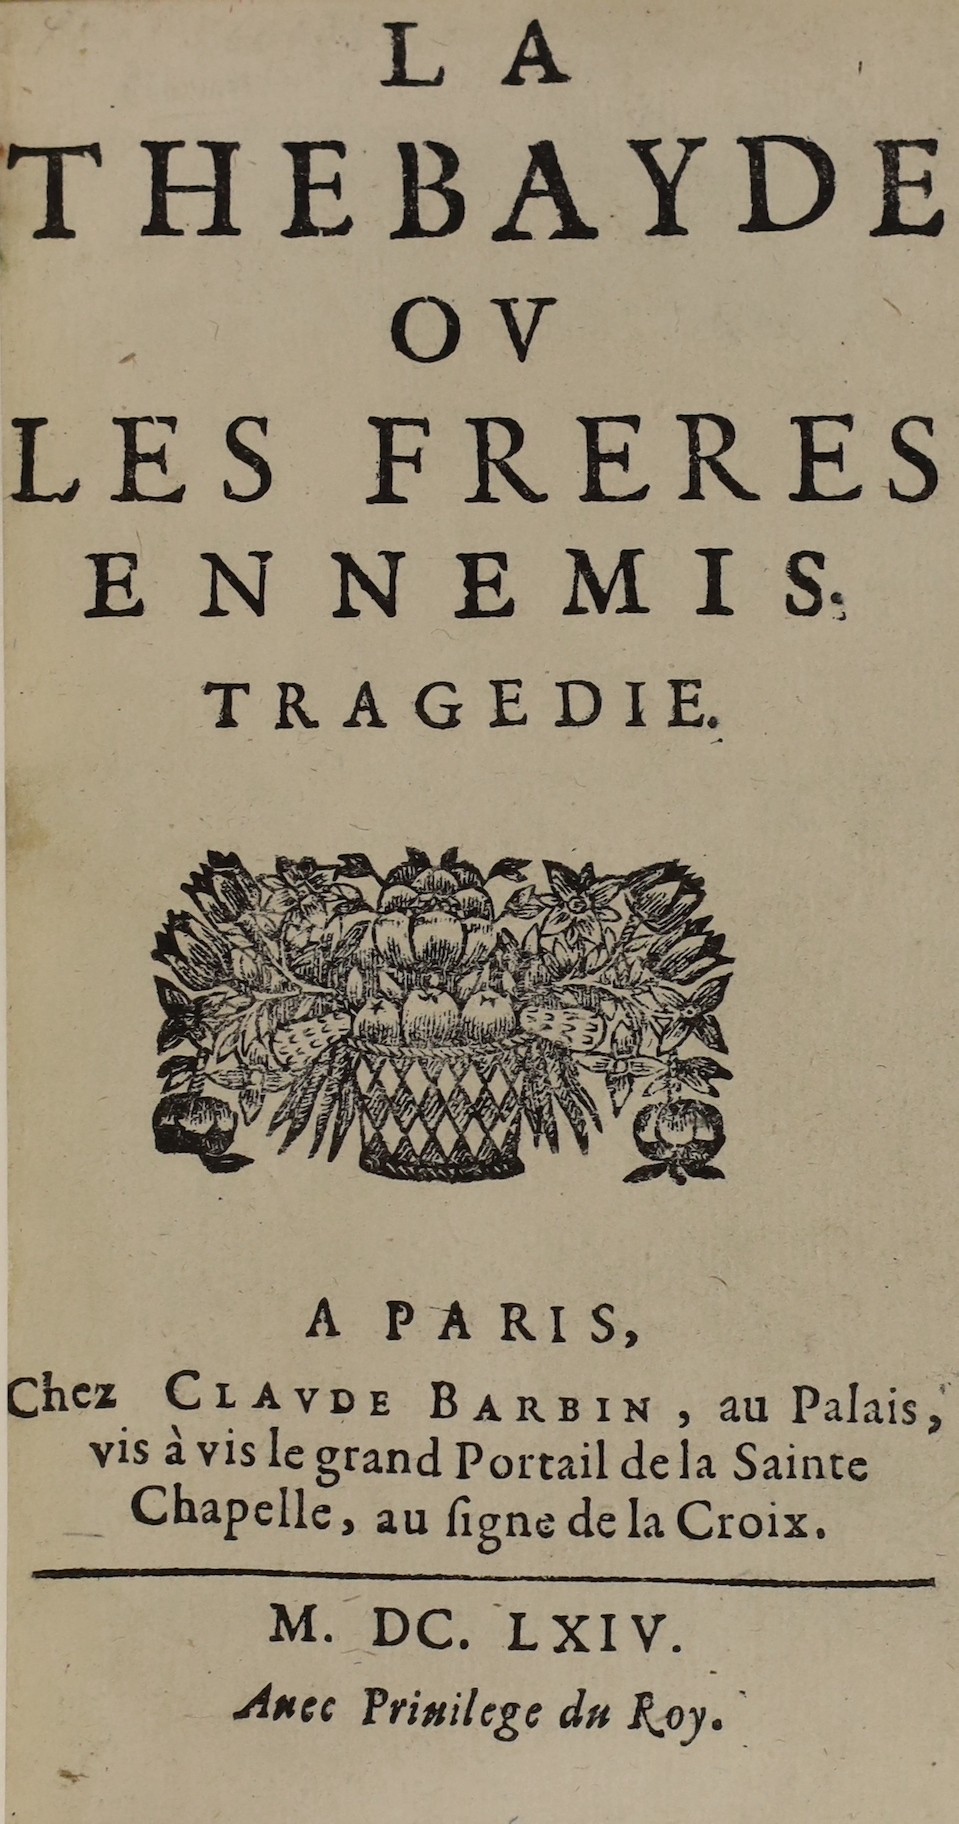 Racine, Jean Baptiste - La Thebayde ou les Freres Ennemis, Tragedie, 1st edition, 12mo, crushed tan morocco, by Riviere, Claude Barbin, Paris, 1664